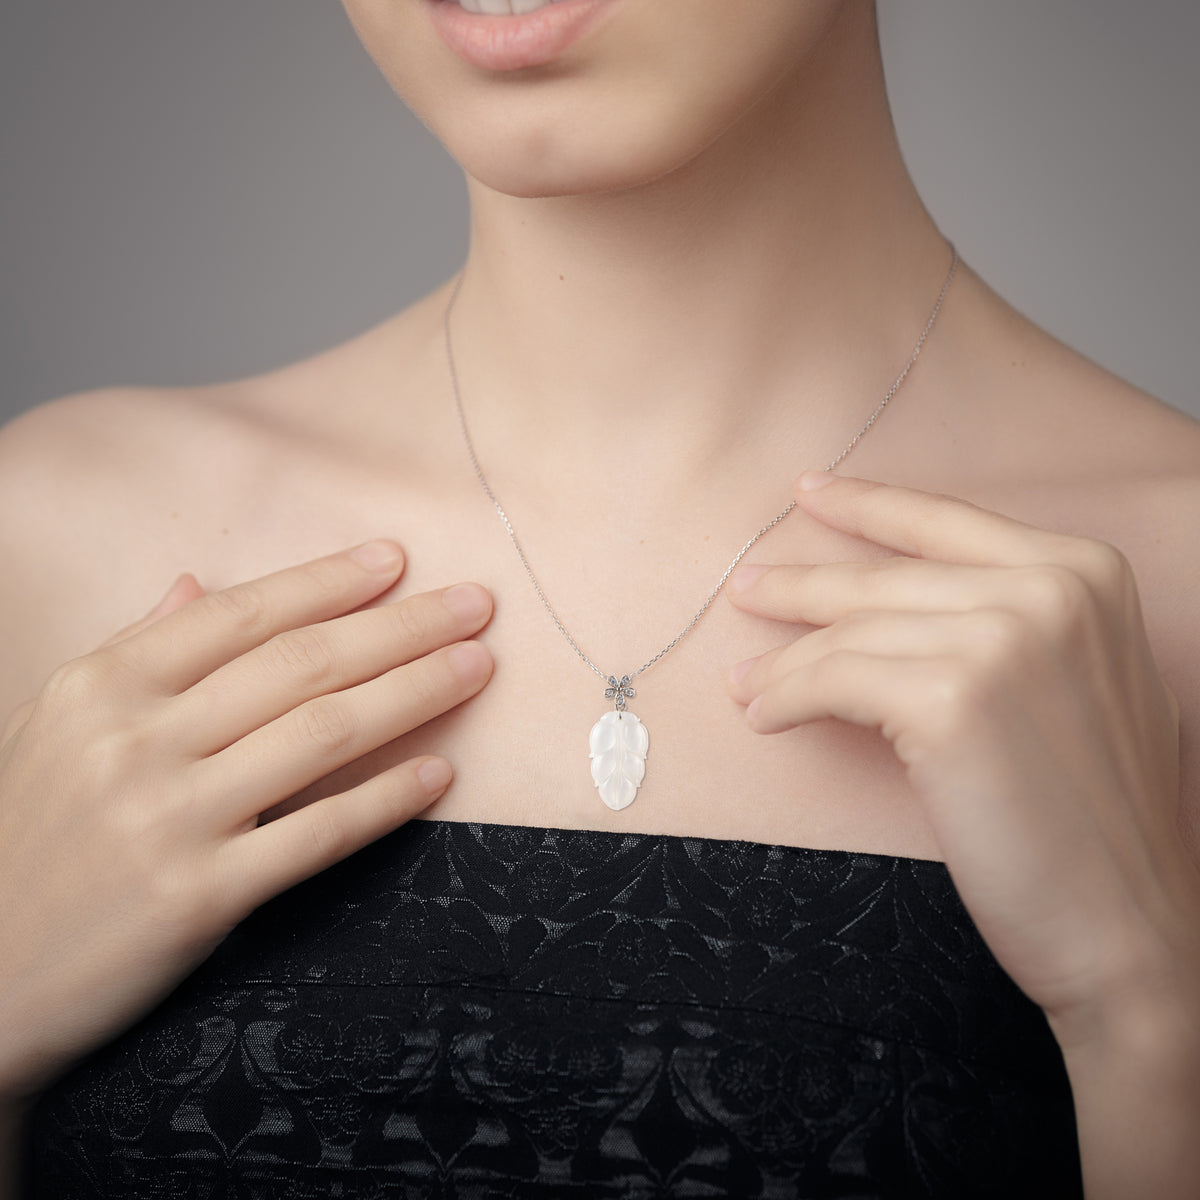 Lady wearing lucky white jade pendant